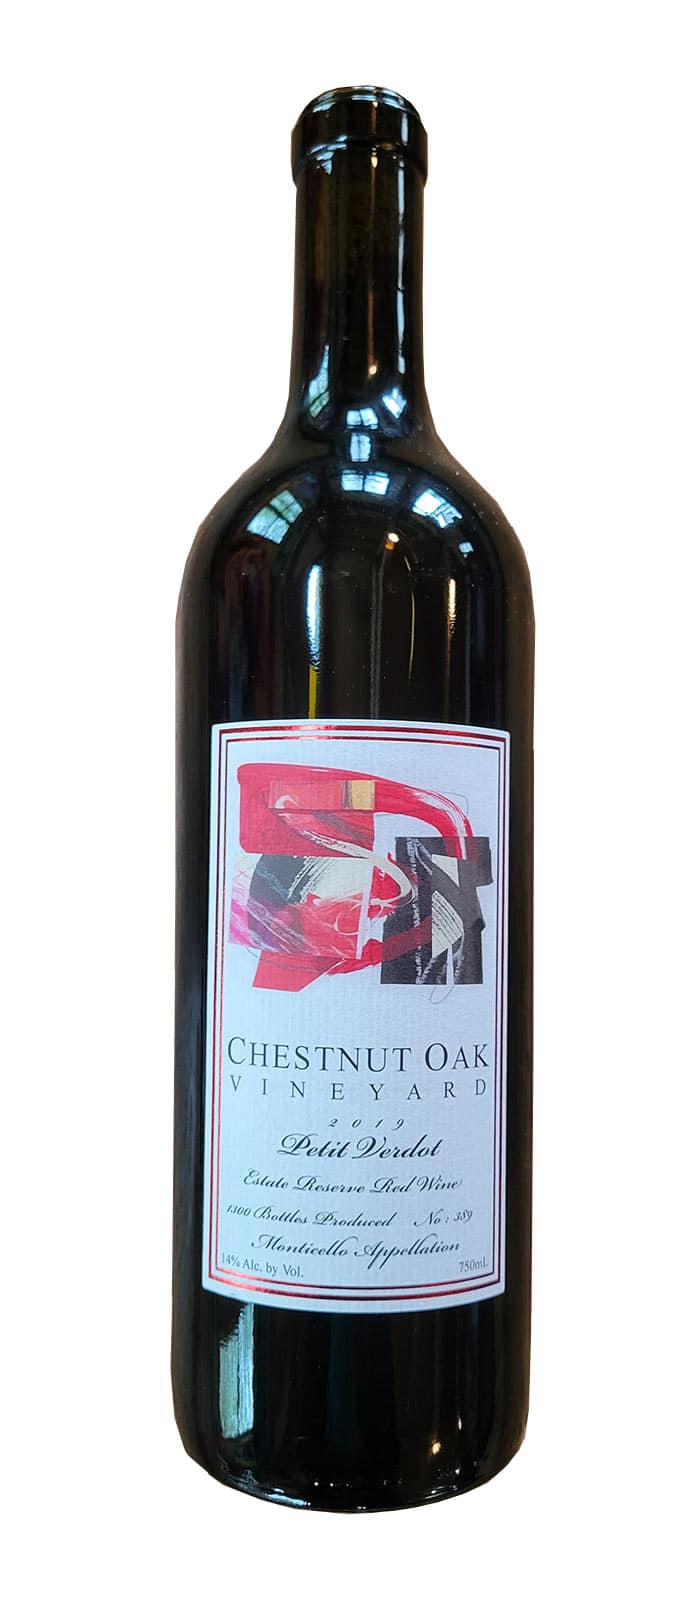 Bottle of Chestnut Oak Vineyard 2019 Petit Verdot Estate Reserve Red Wine, Gold Medal, Virginia Governor's Cup Wine Competition.